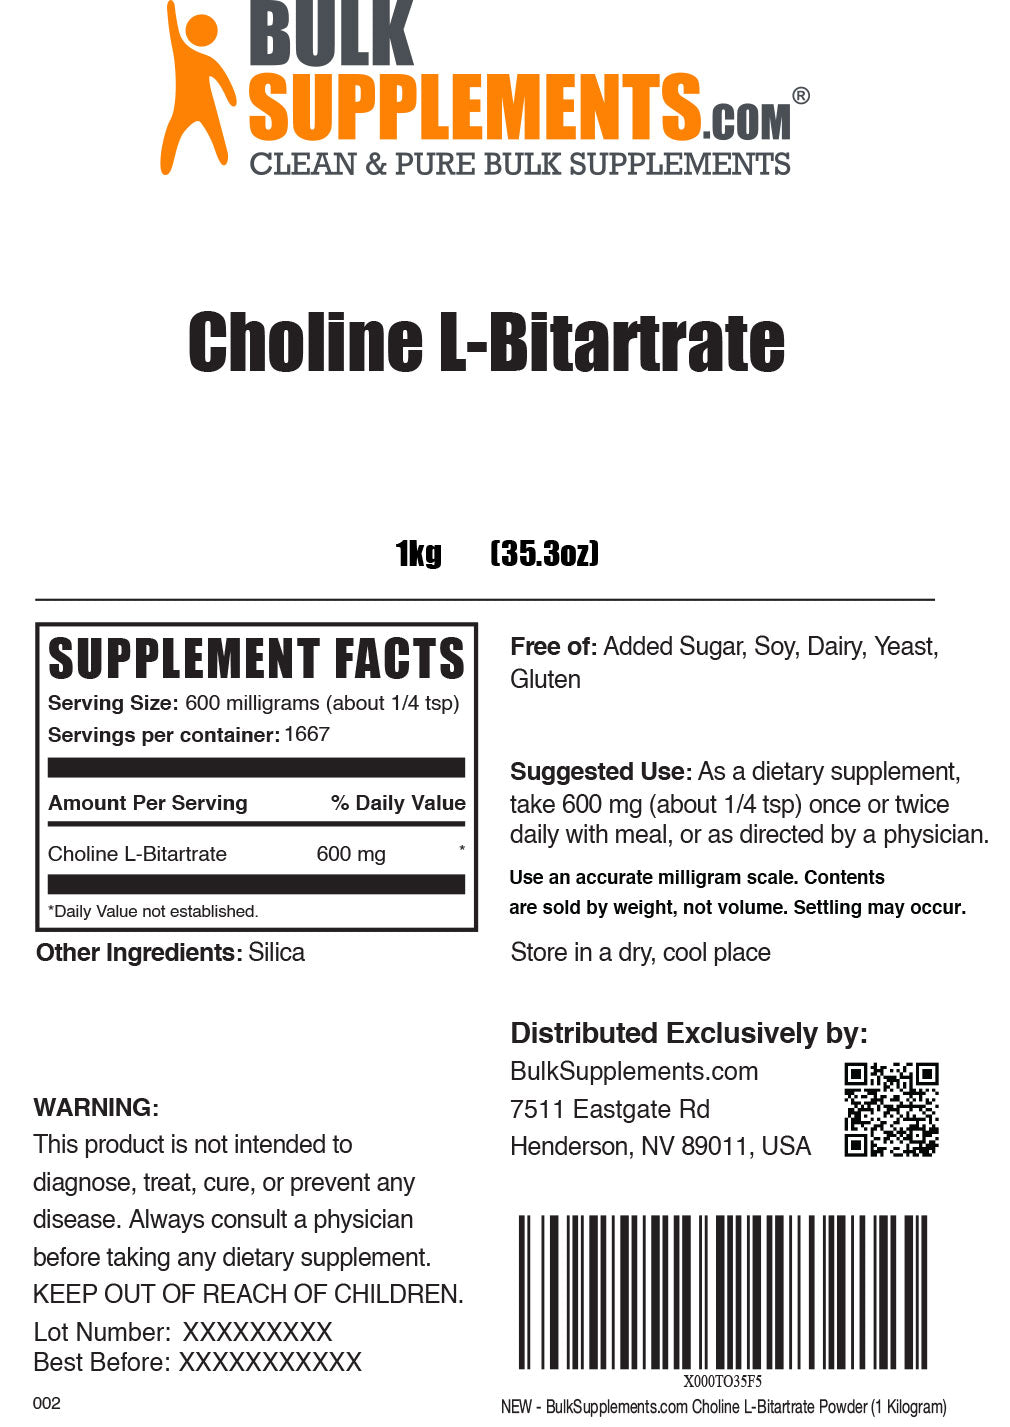 1kg choline supplement facts label